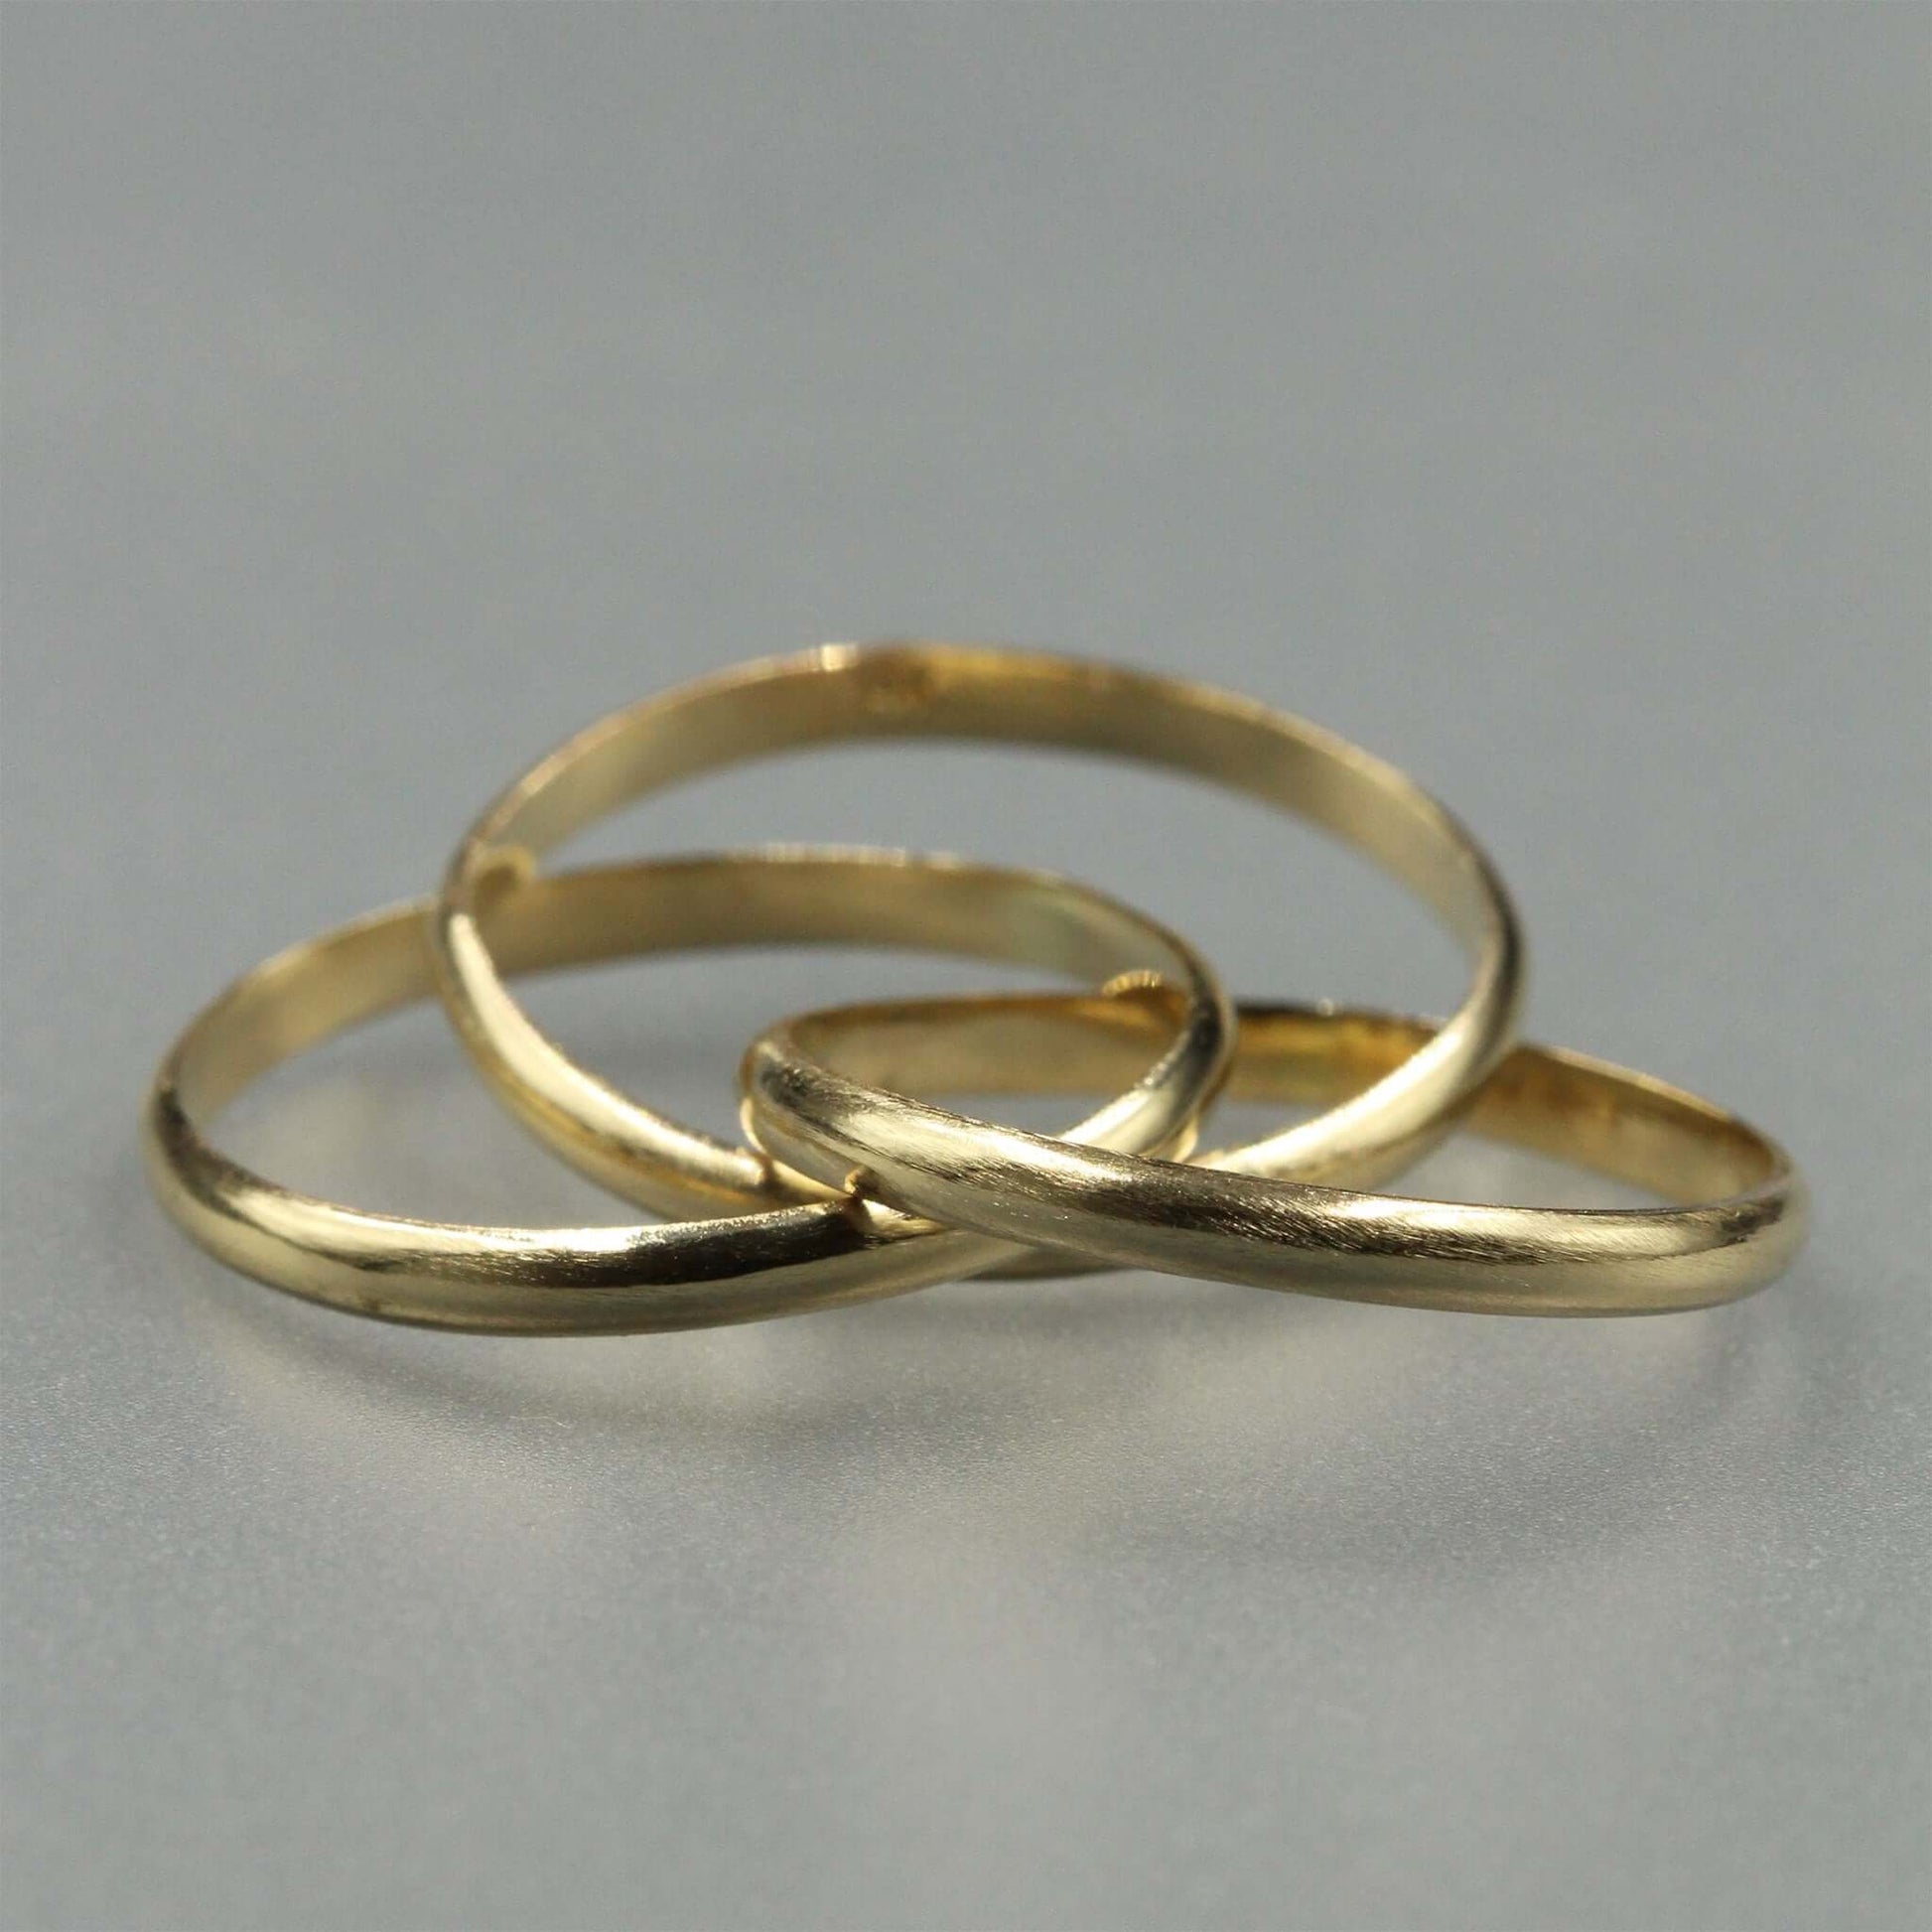 Gold Russian wedding ring in 14k yellow gold, handmade by Rebecca Cordingley